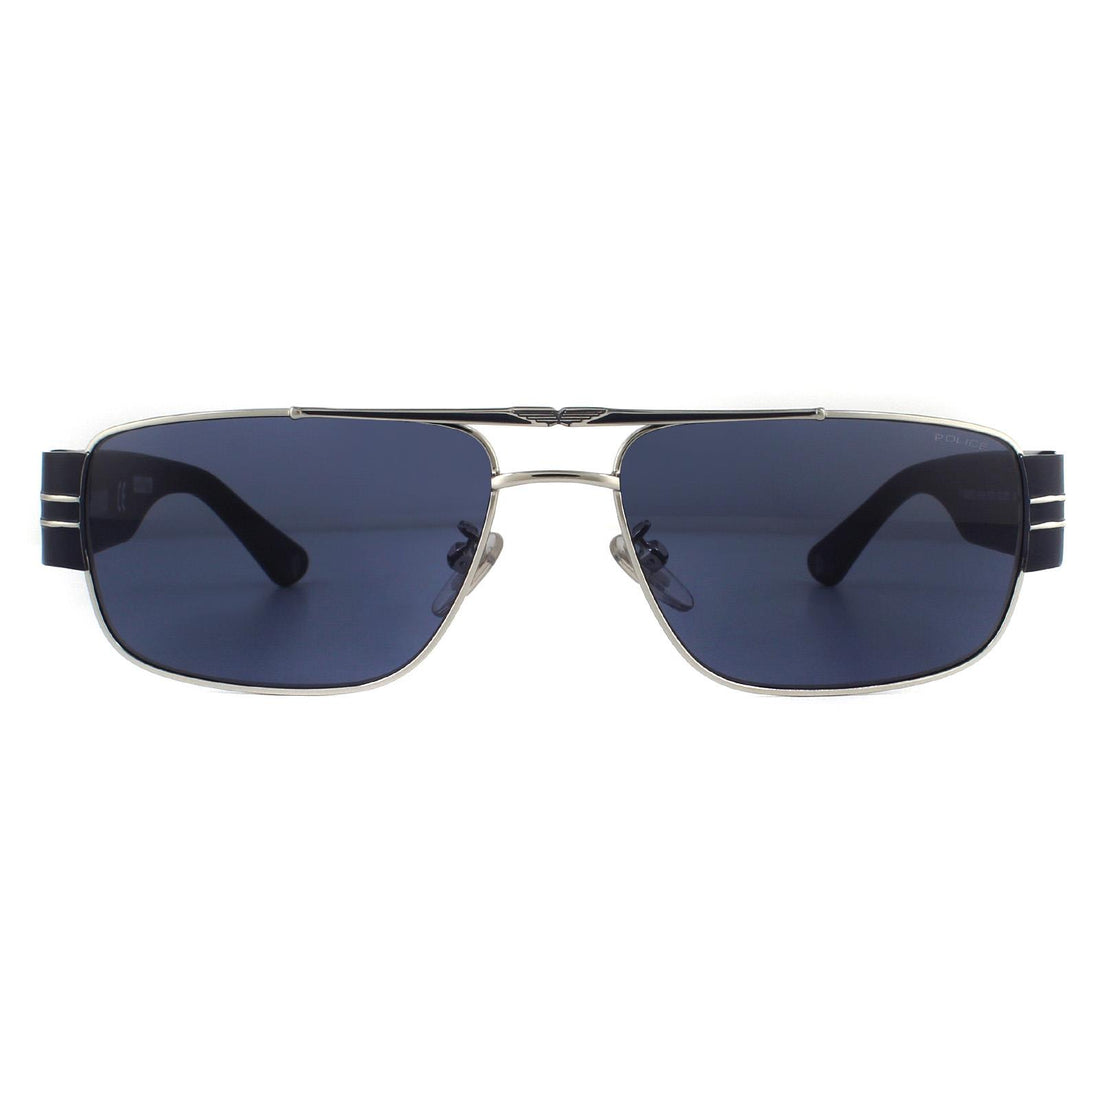 Police Sunglasses SPLA55 Origins 29 0E70 Shiny Palladium Blue